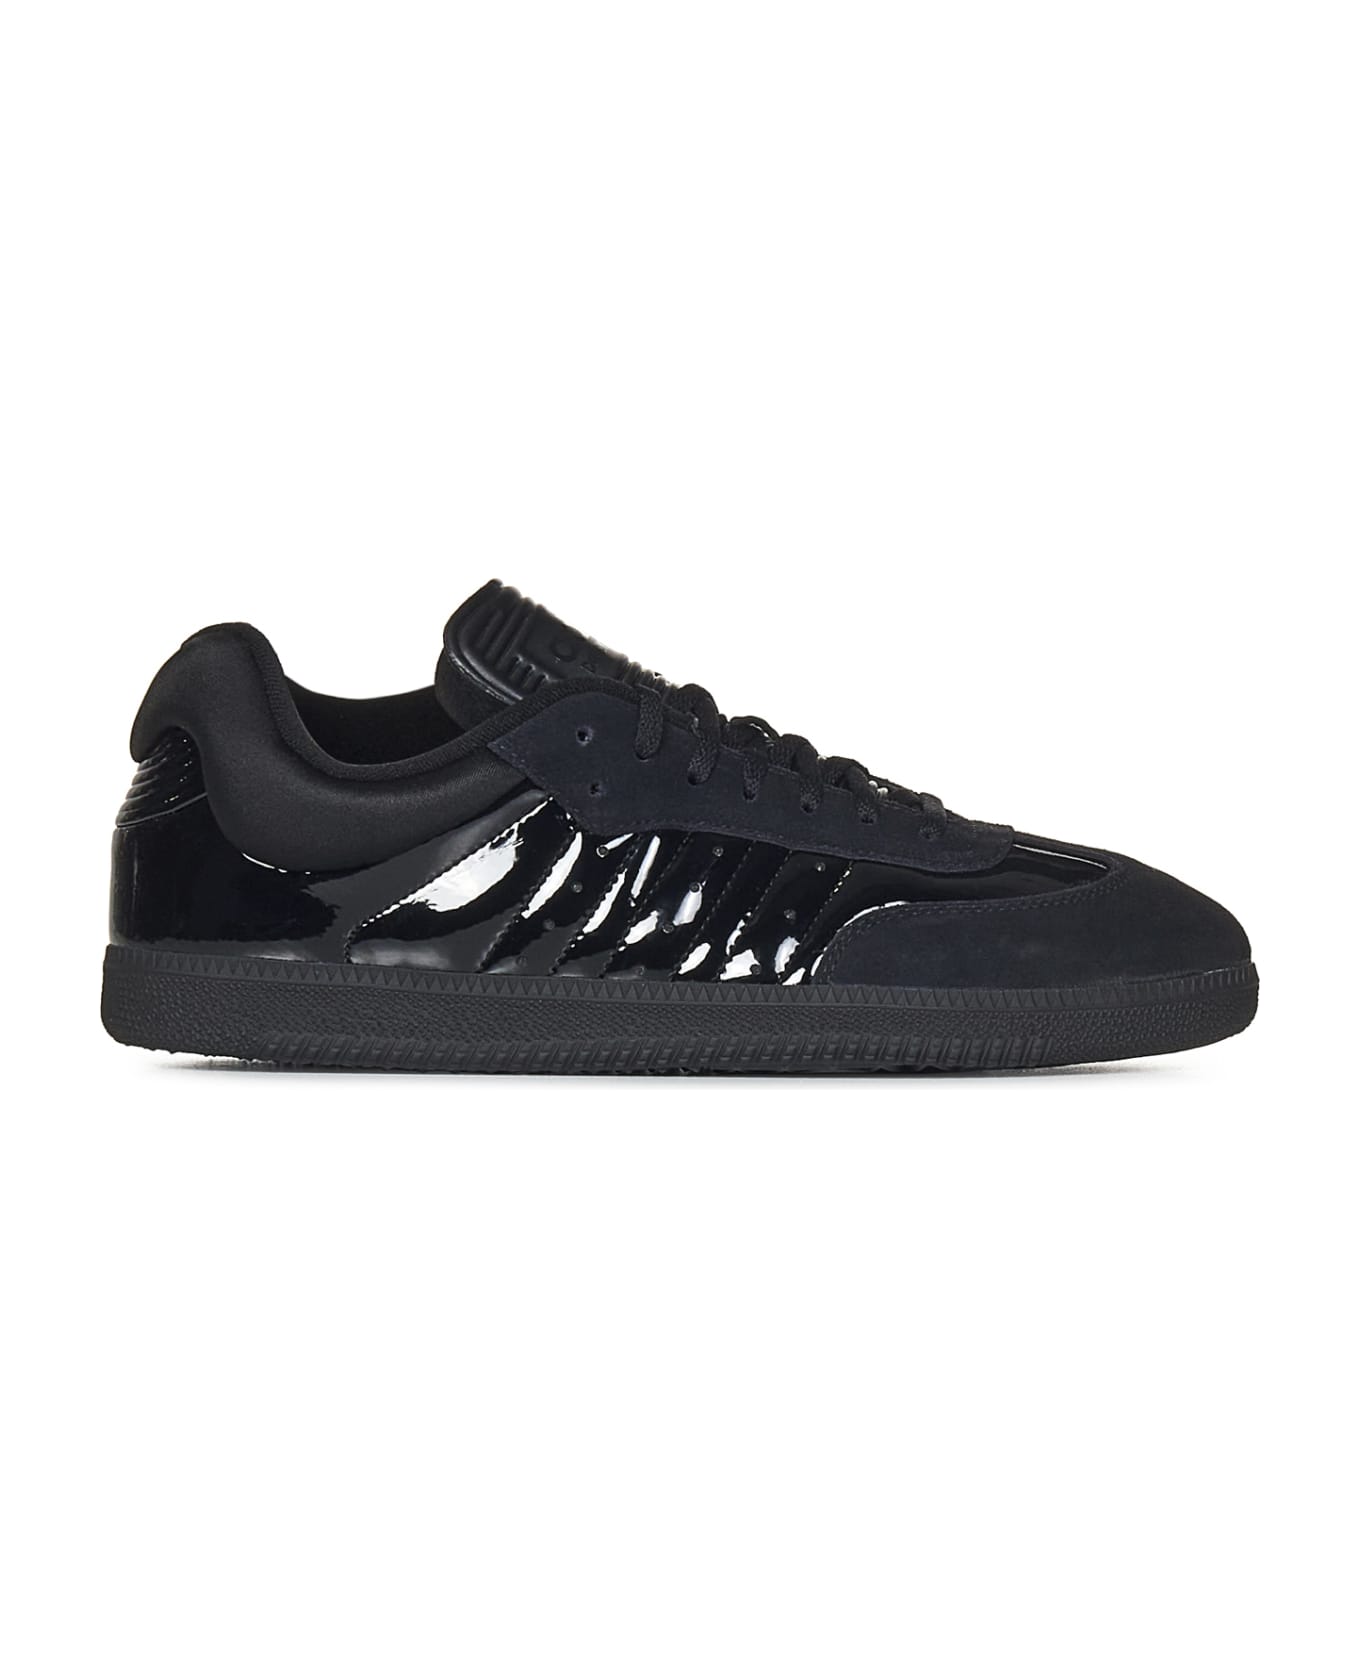 Adidas By Stella Mccartney Samba Dingyun Zhang Sneakers - Black